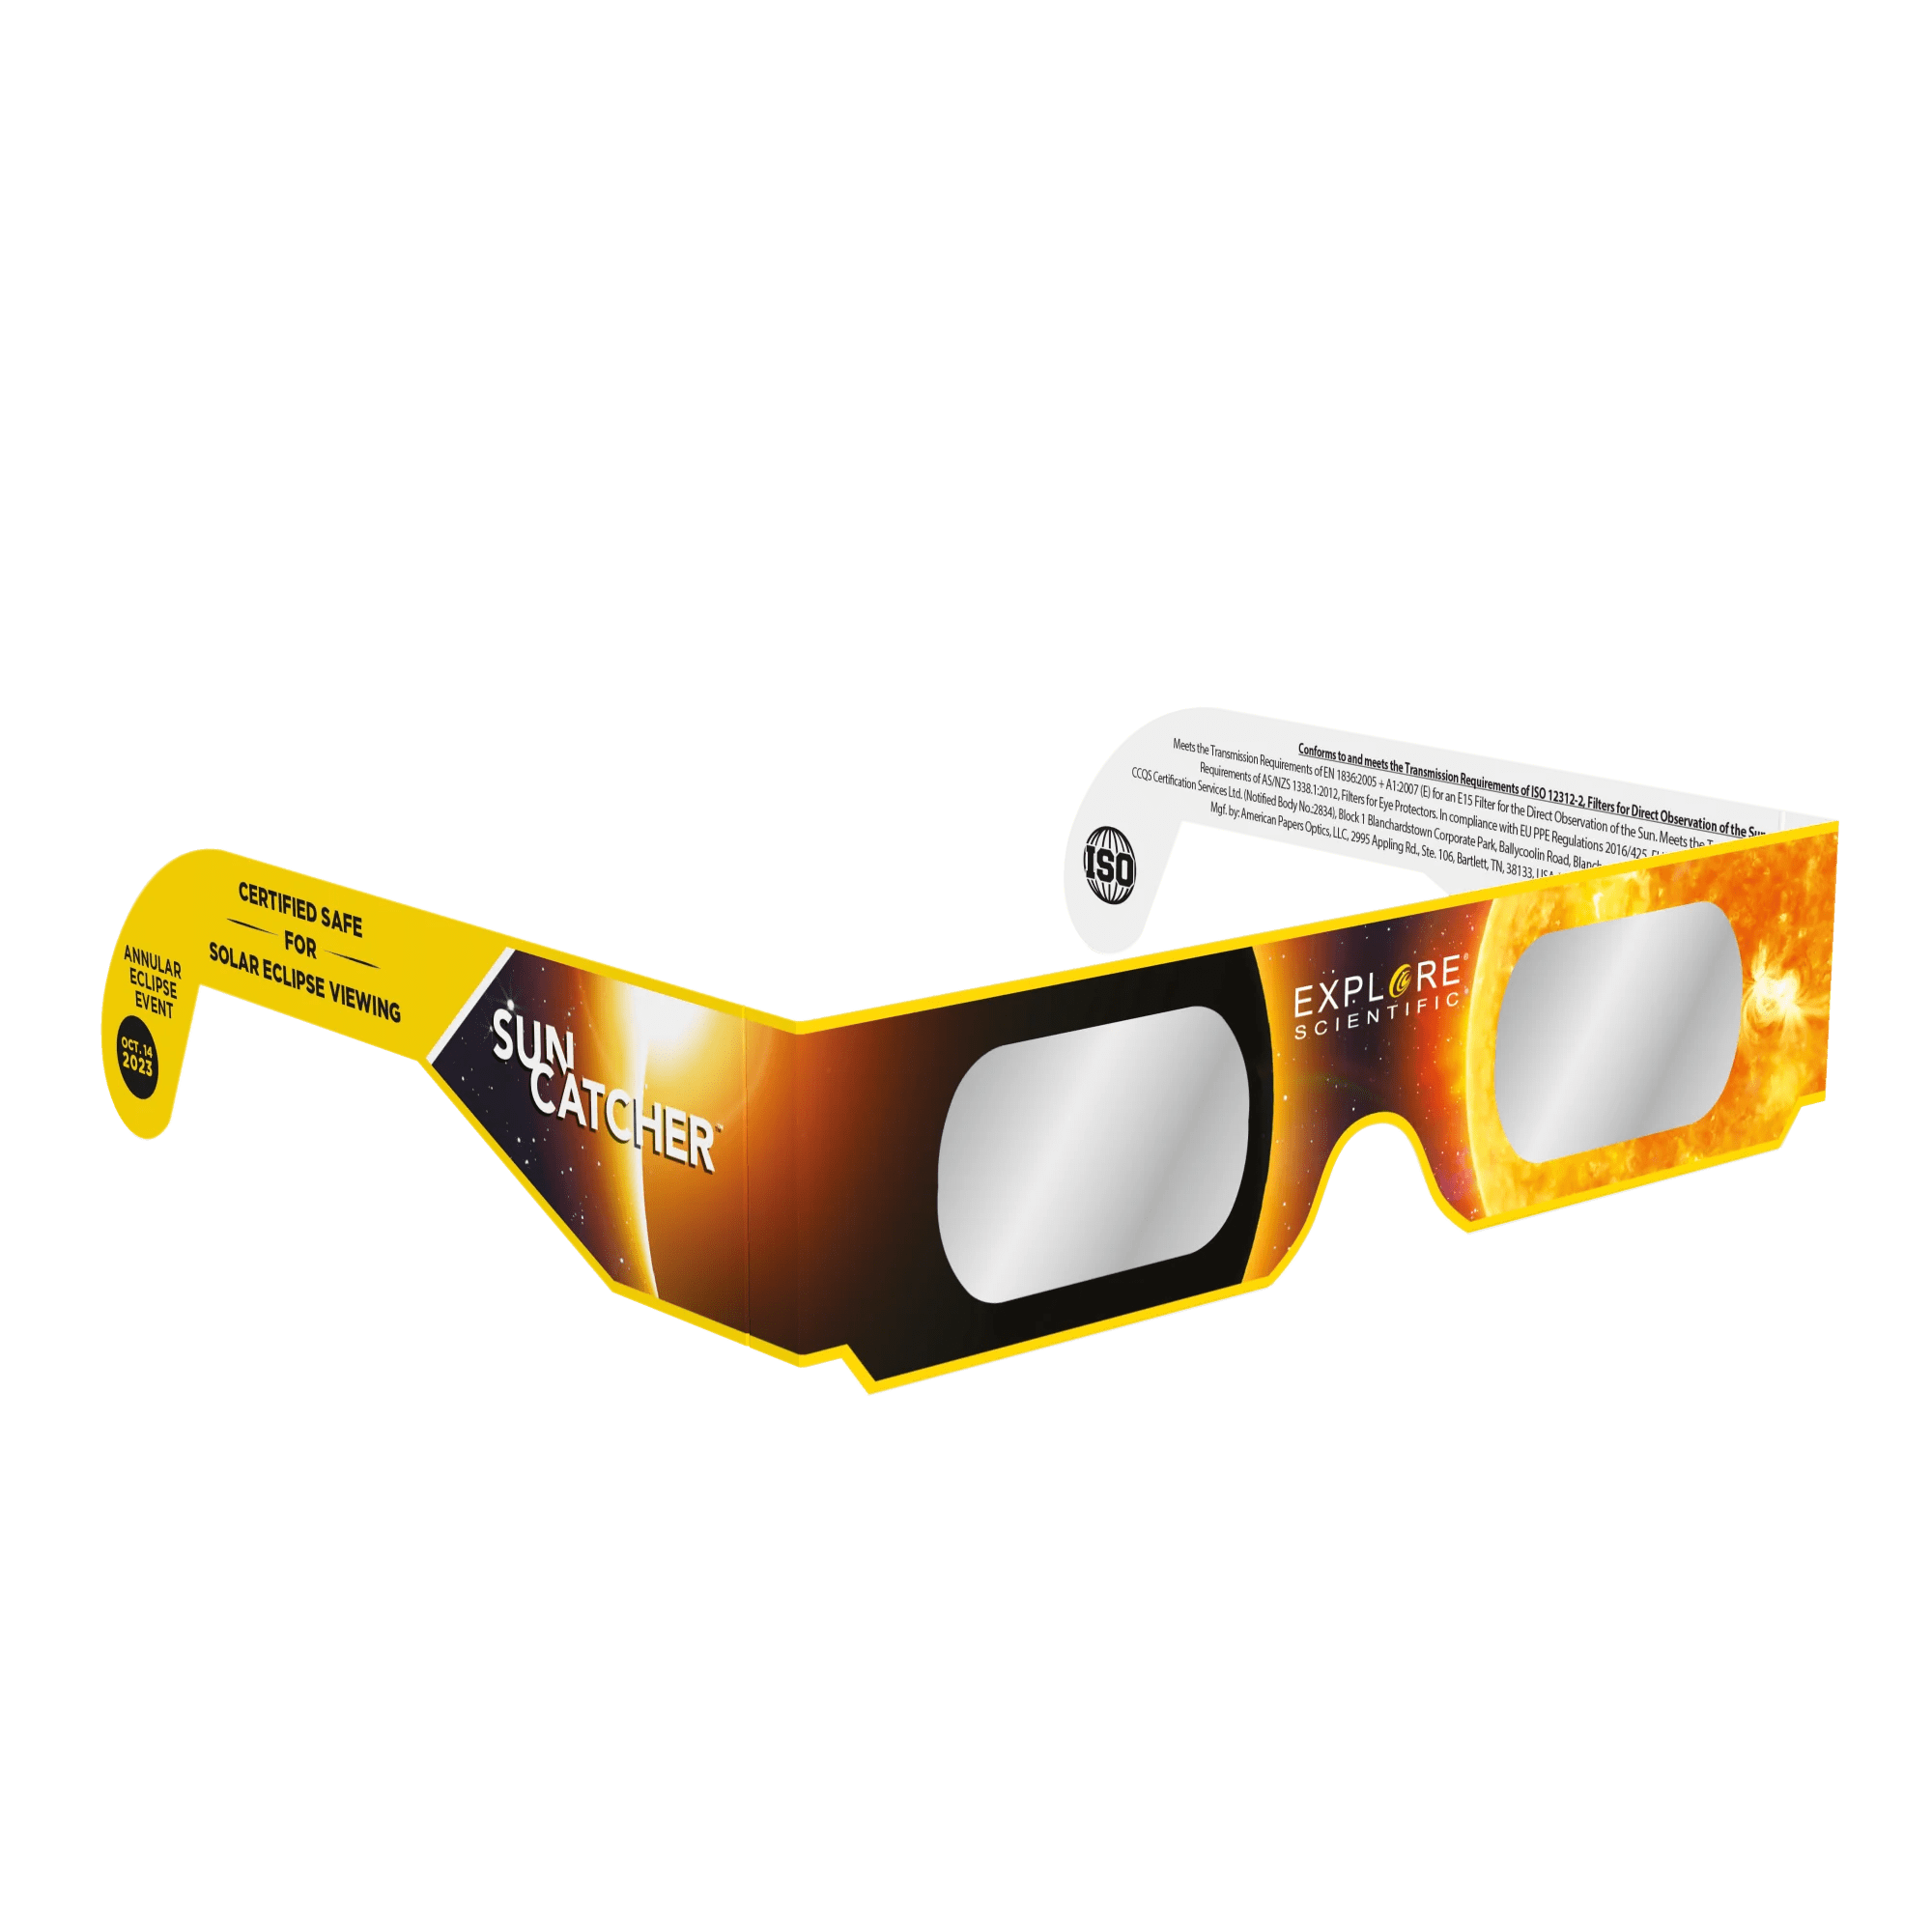 Explore Scientific Telescope Explore Scientific Sun Catcher Solar Eclipse Glasses - 88-70005